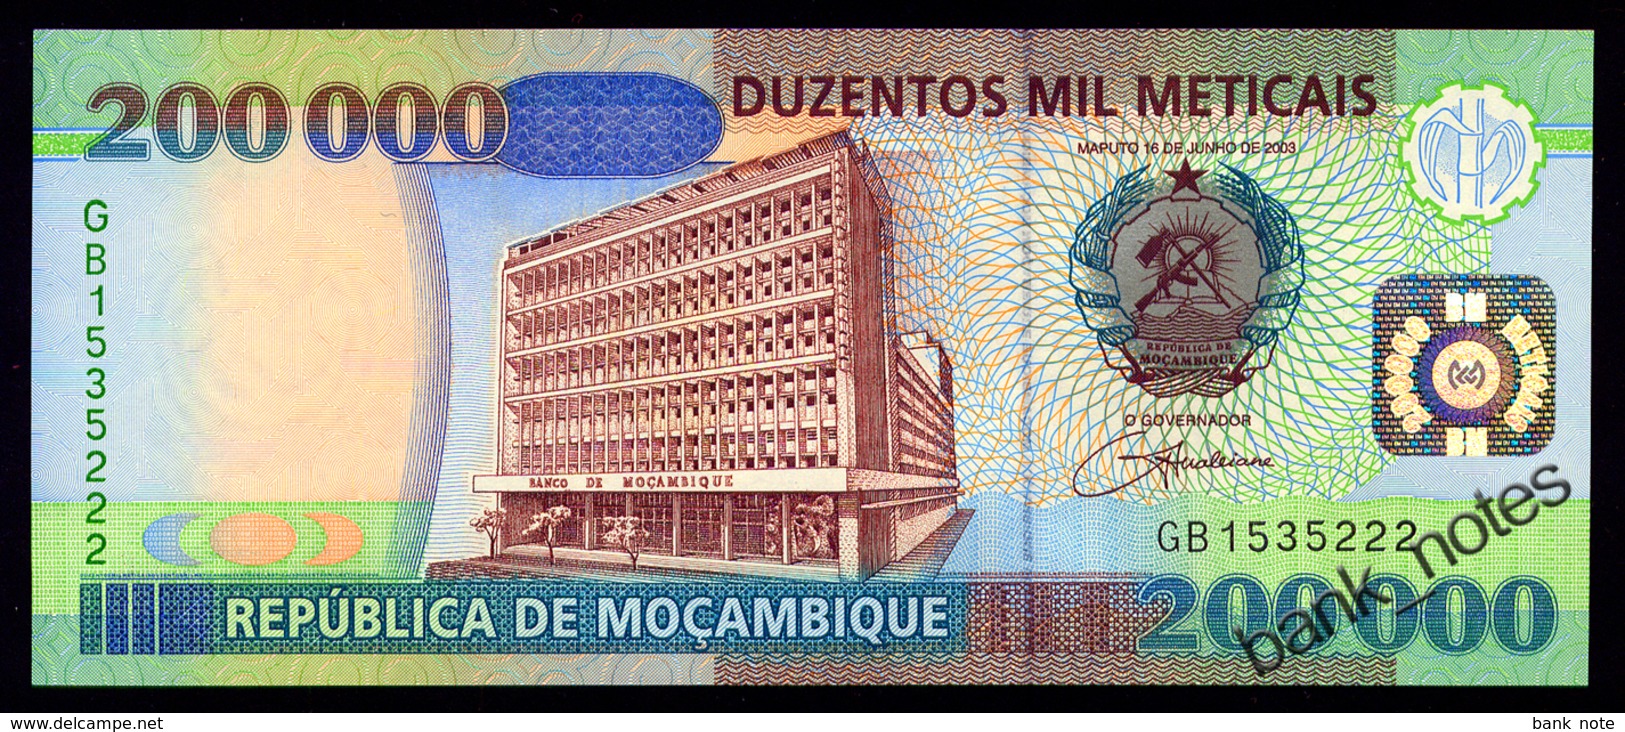 MOZAMBIQUE 200000 METICAIS 2003 Pick 141 Unc - Mozambico